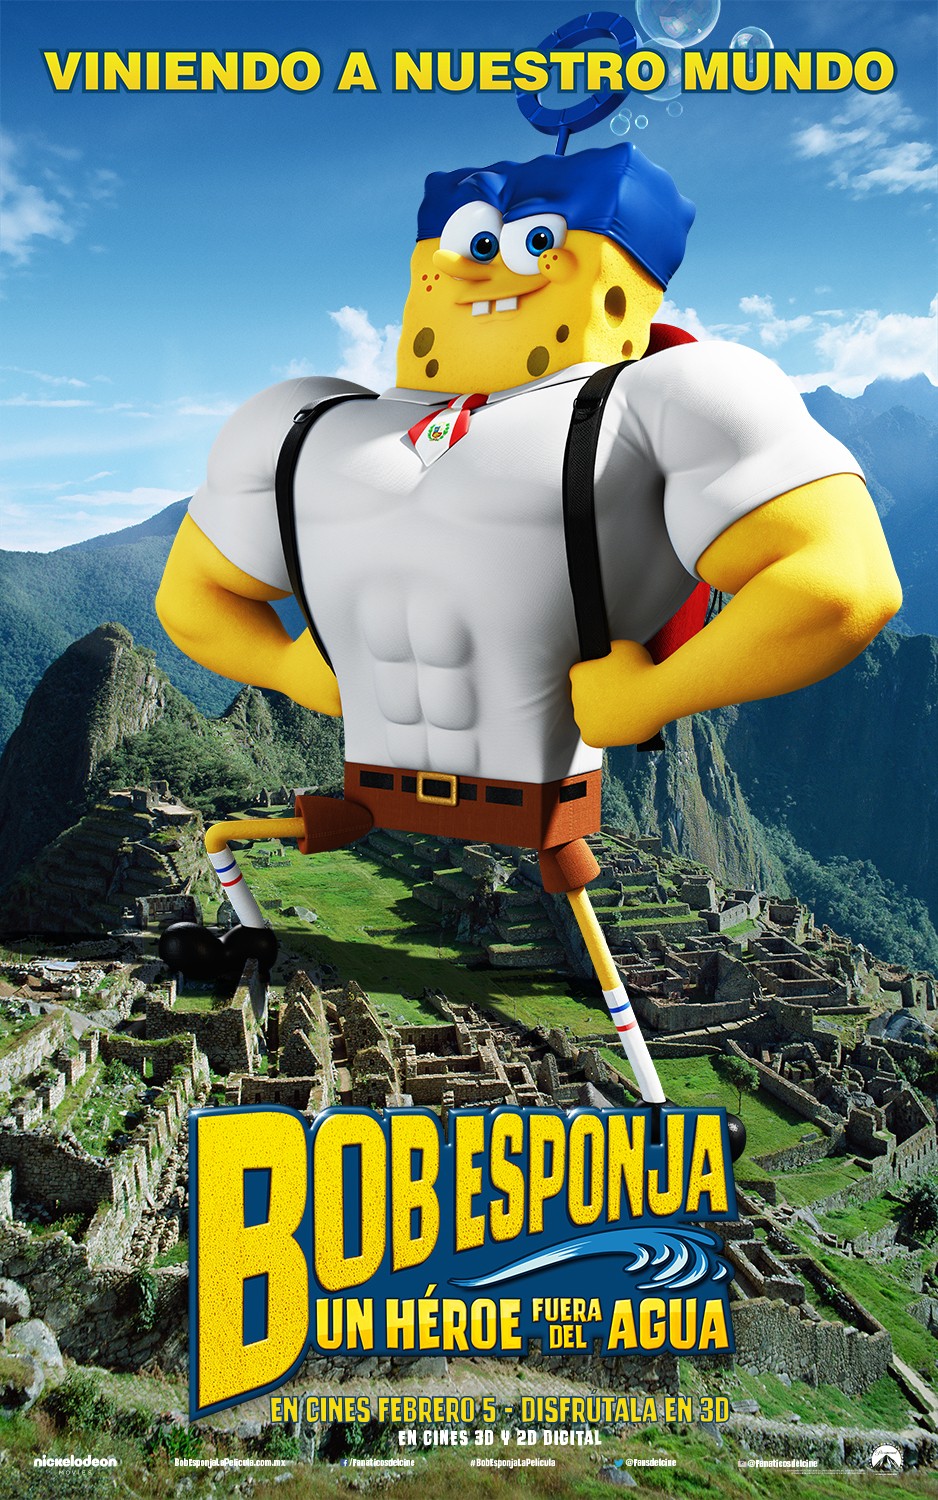 Extra Large Movie Poster Image for SpongeBob SquarePants 2 (#18 of 33)